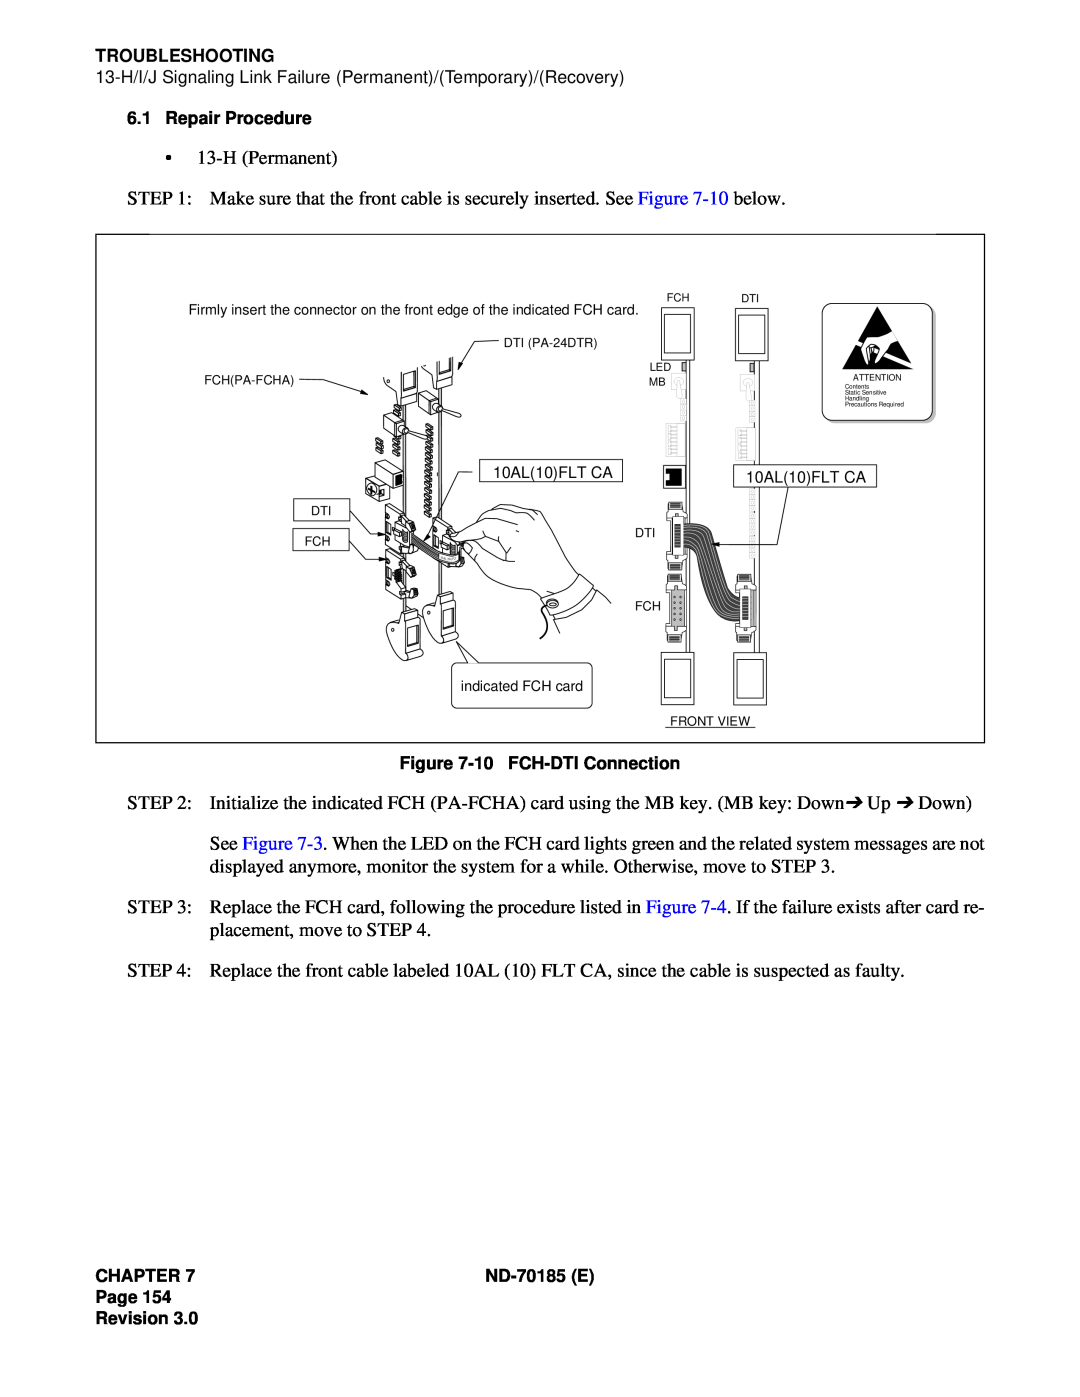 NEC NEAX2400 system manual • 13-HPermanent 